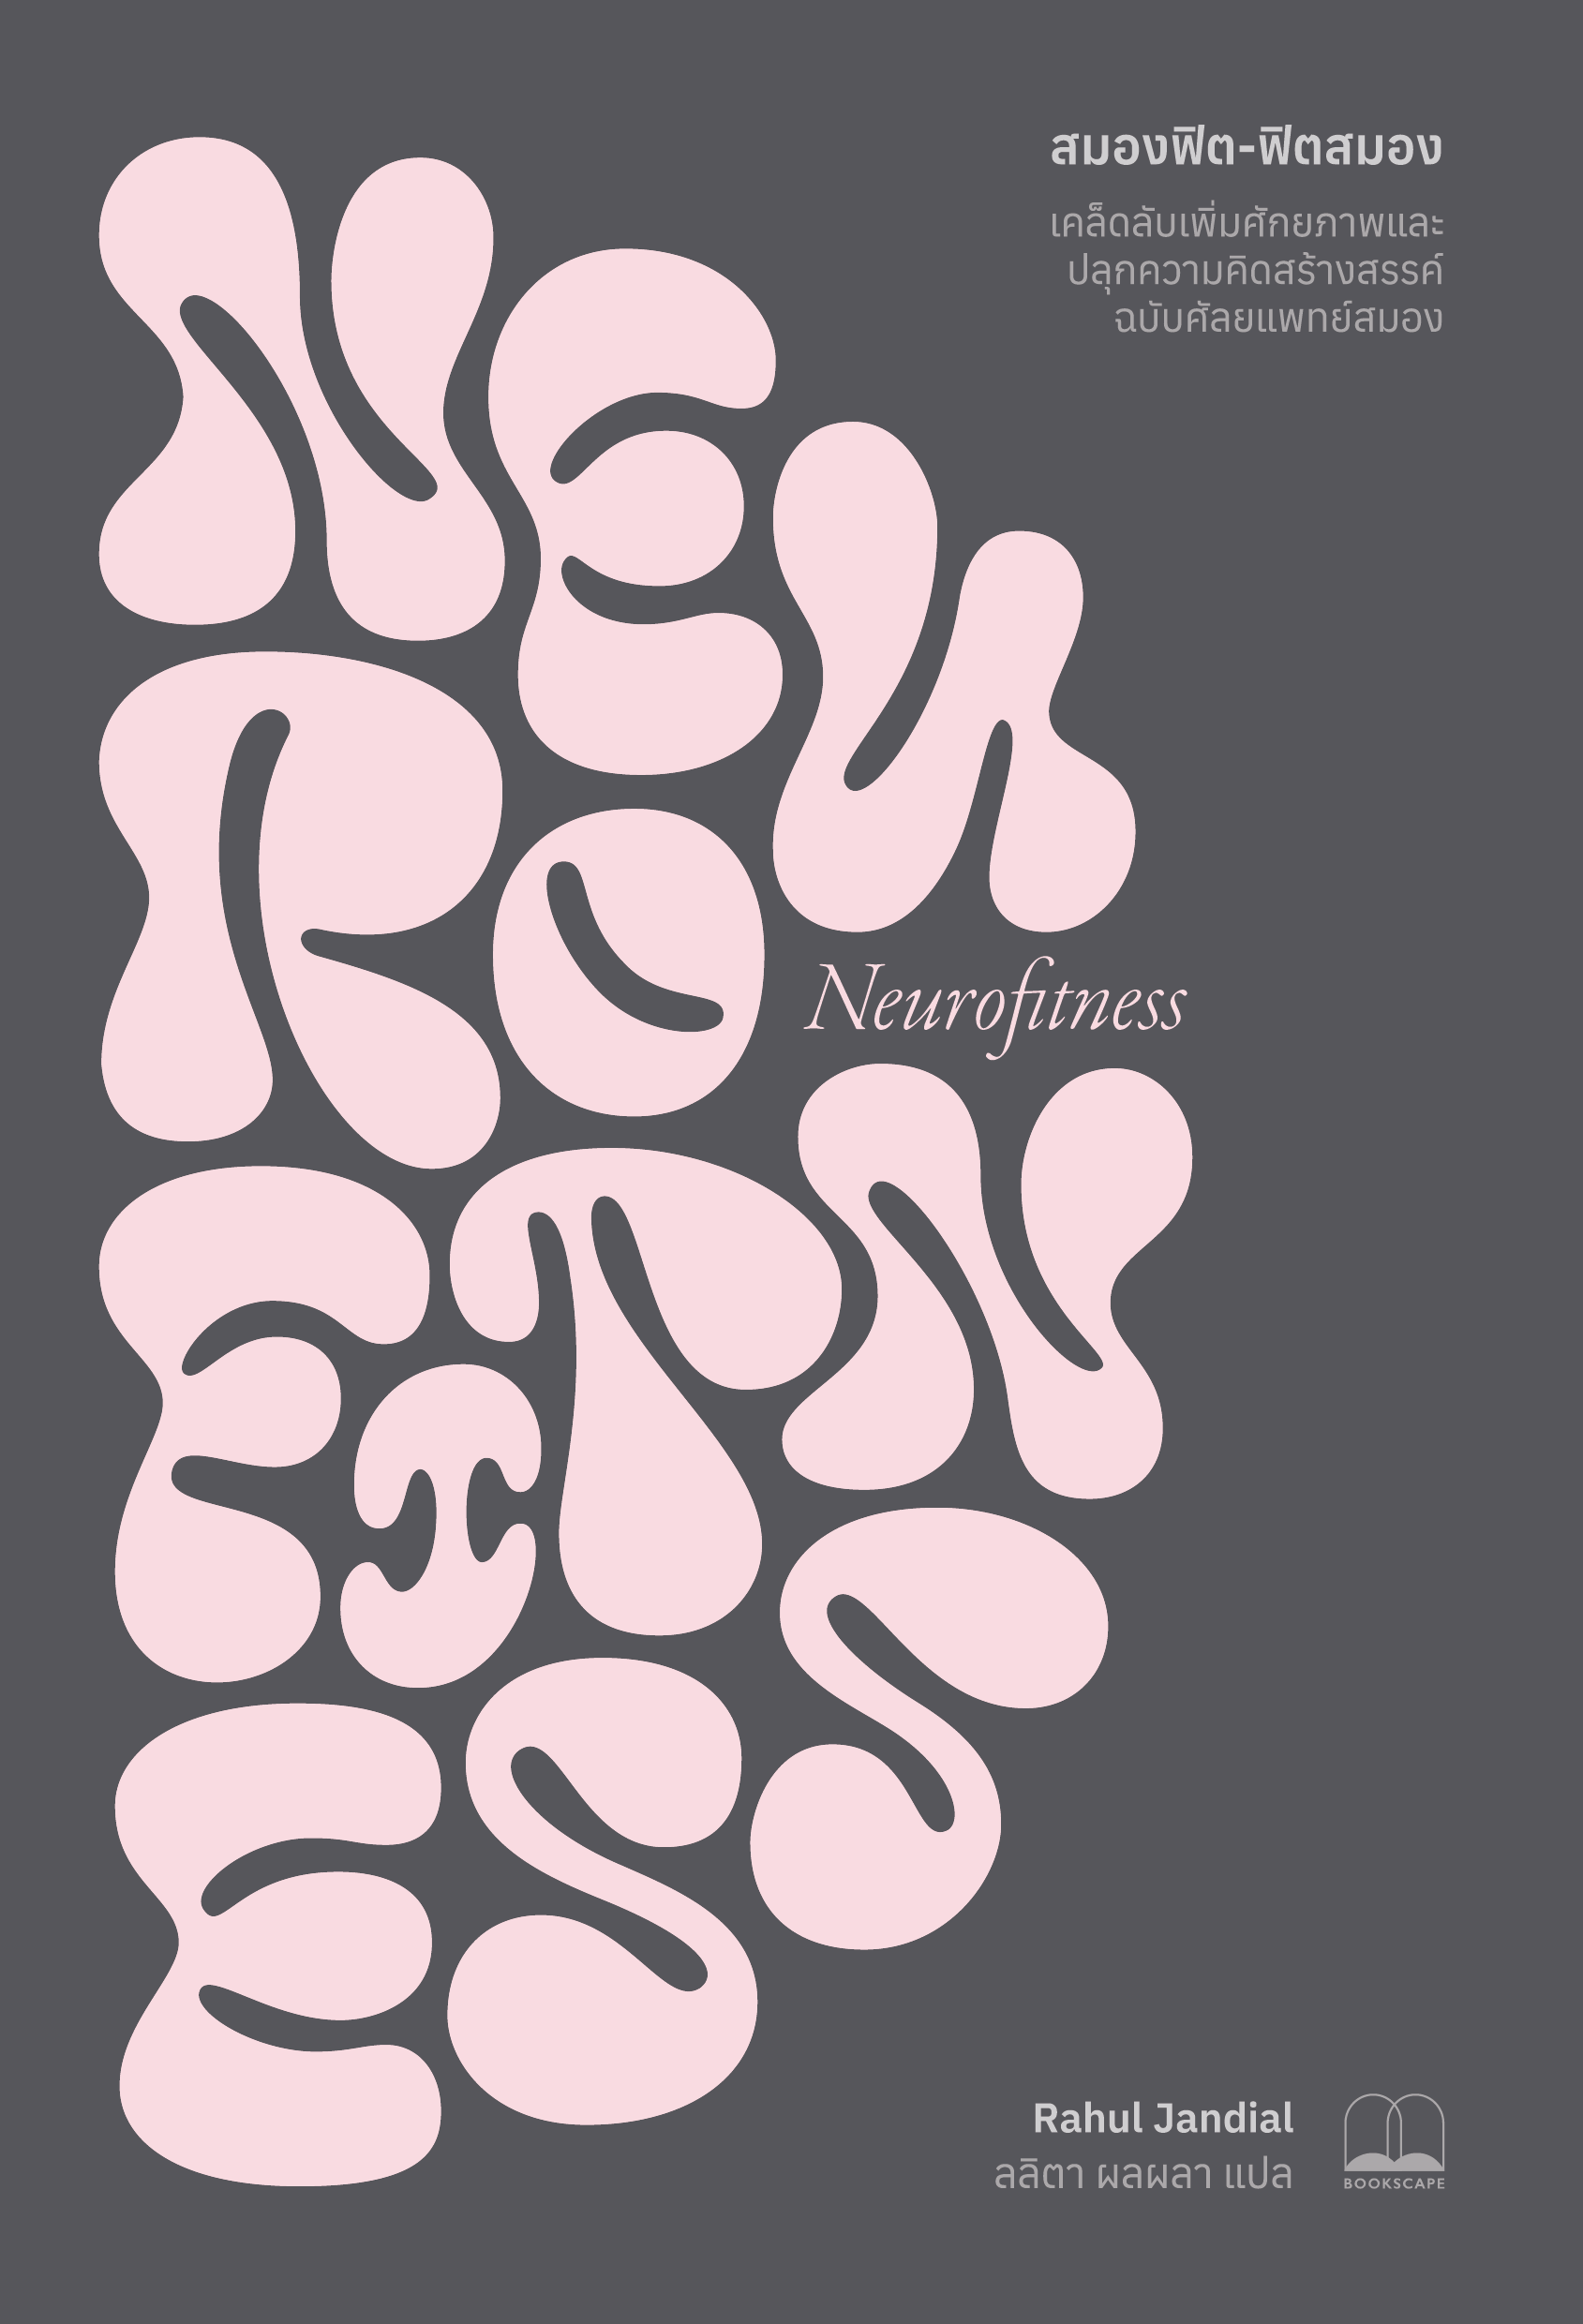 Neurofitness สมองฟิต-ฟิตสมอง / Rahul Jandial / ลลิตา ผลผลา / Bookscape